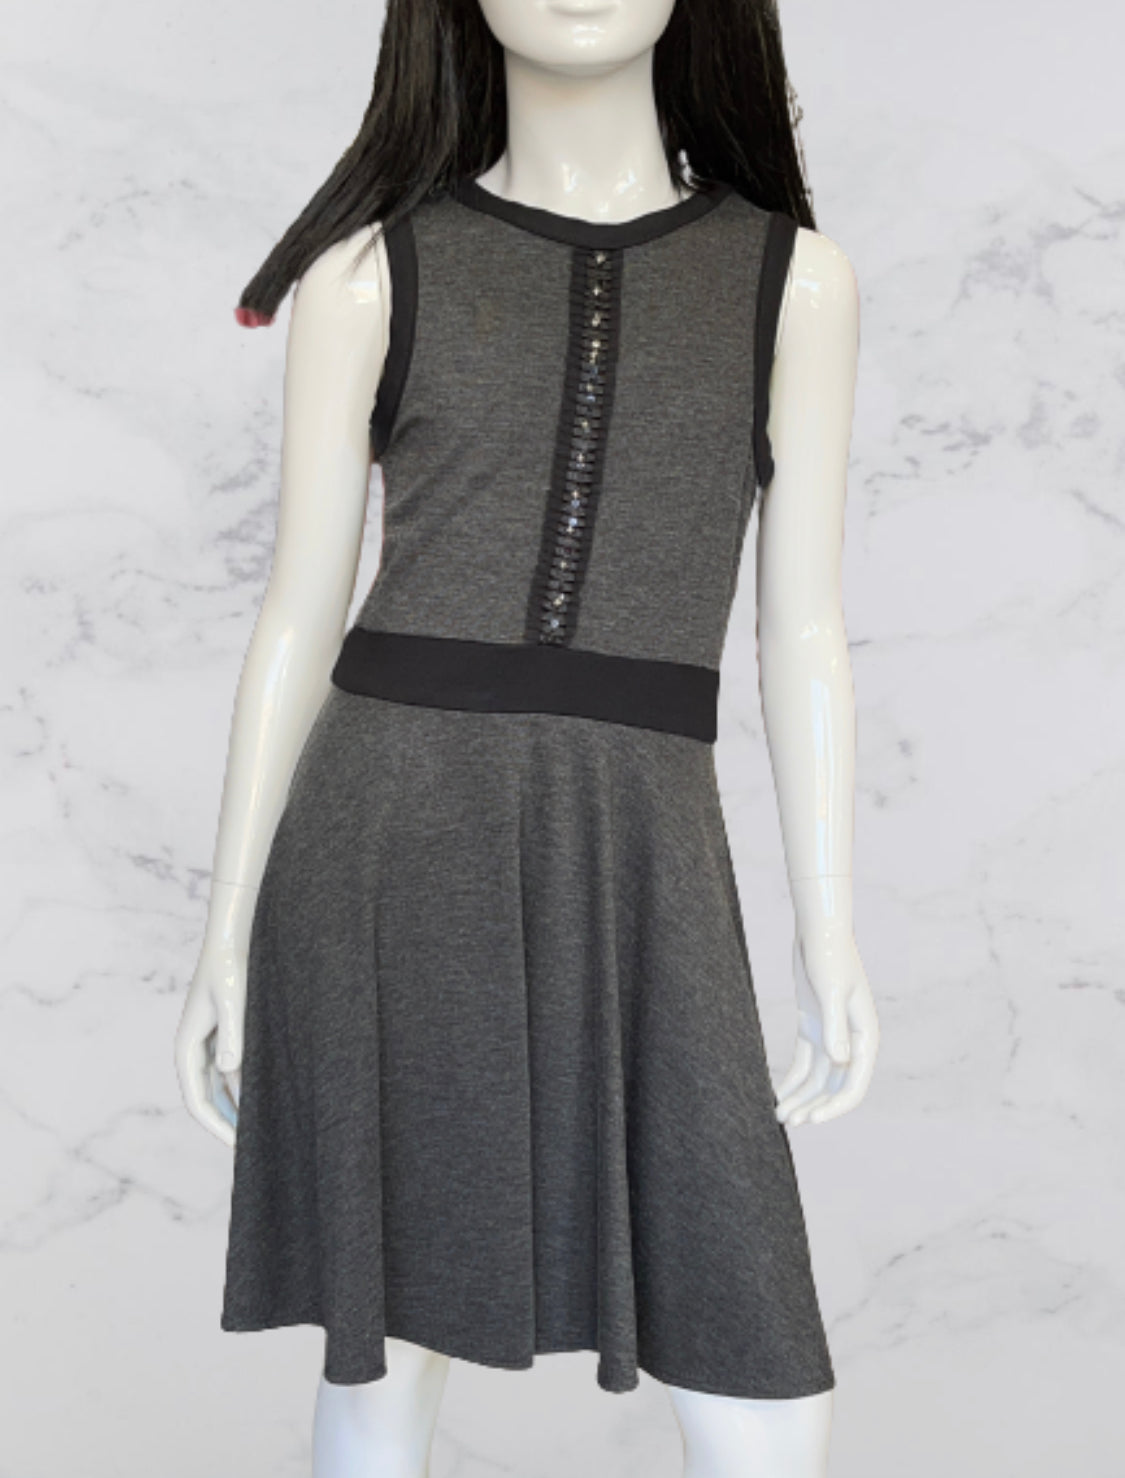 Sally Miller Girl's Grey & Black Dress With Stud Detail